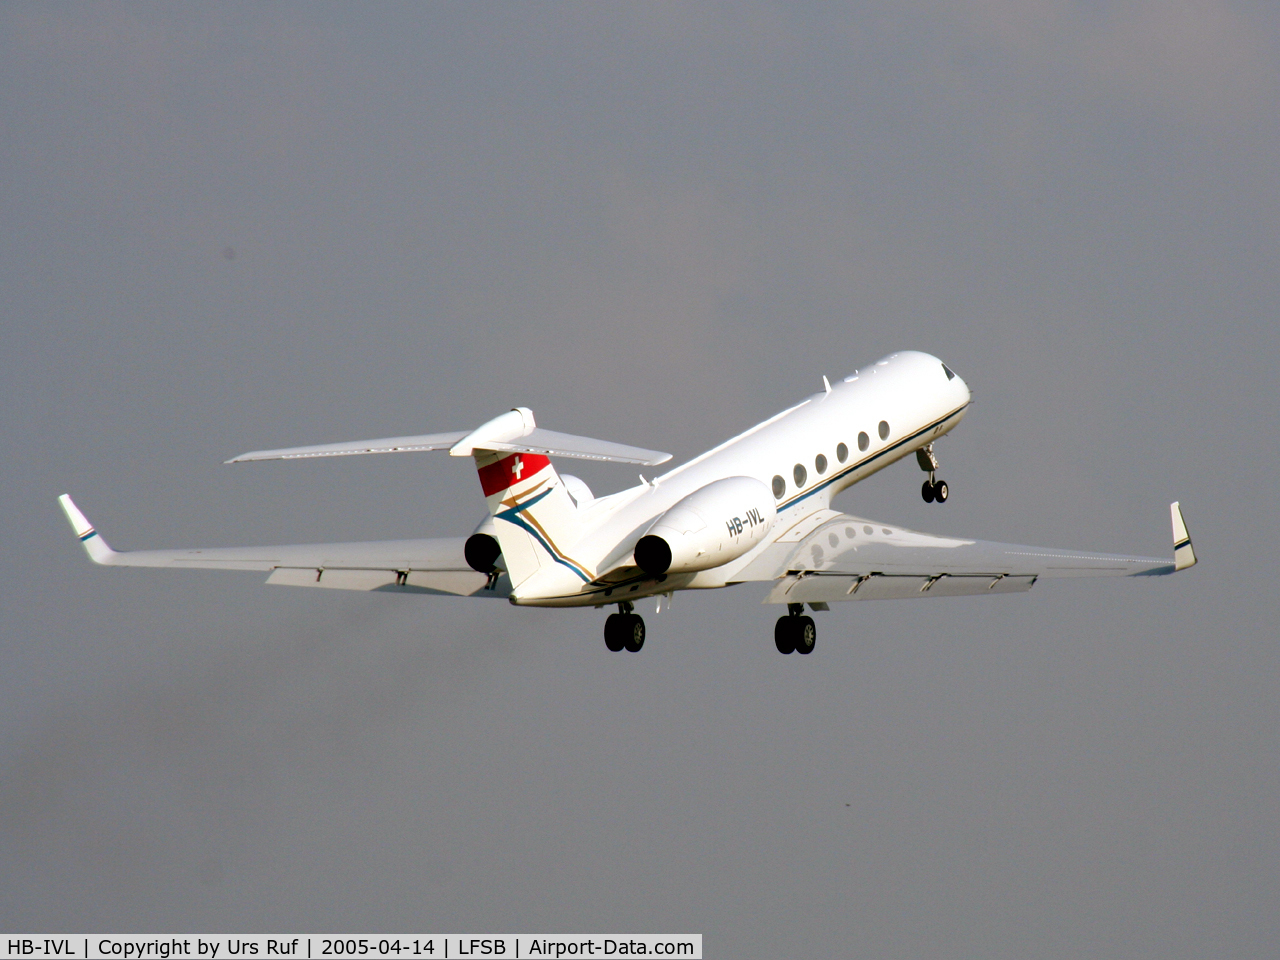 HB-IVL, Gulfstream Aerospace 5 C/N 513, Departing runway 15 to somewhere